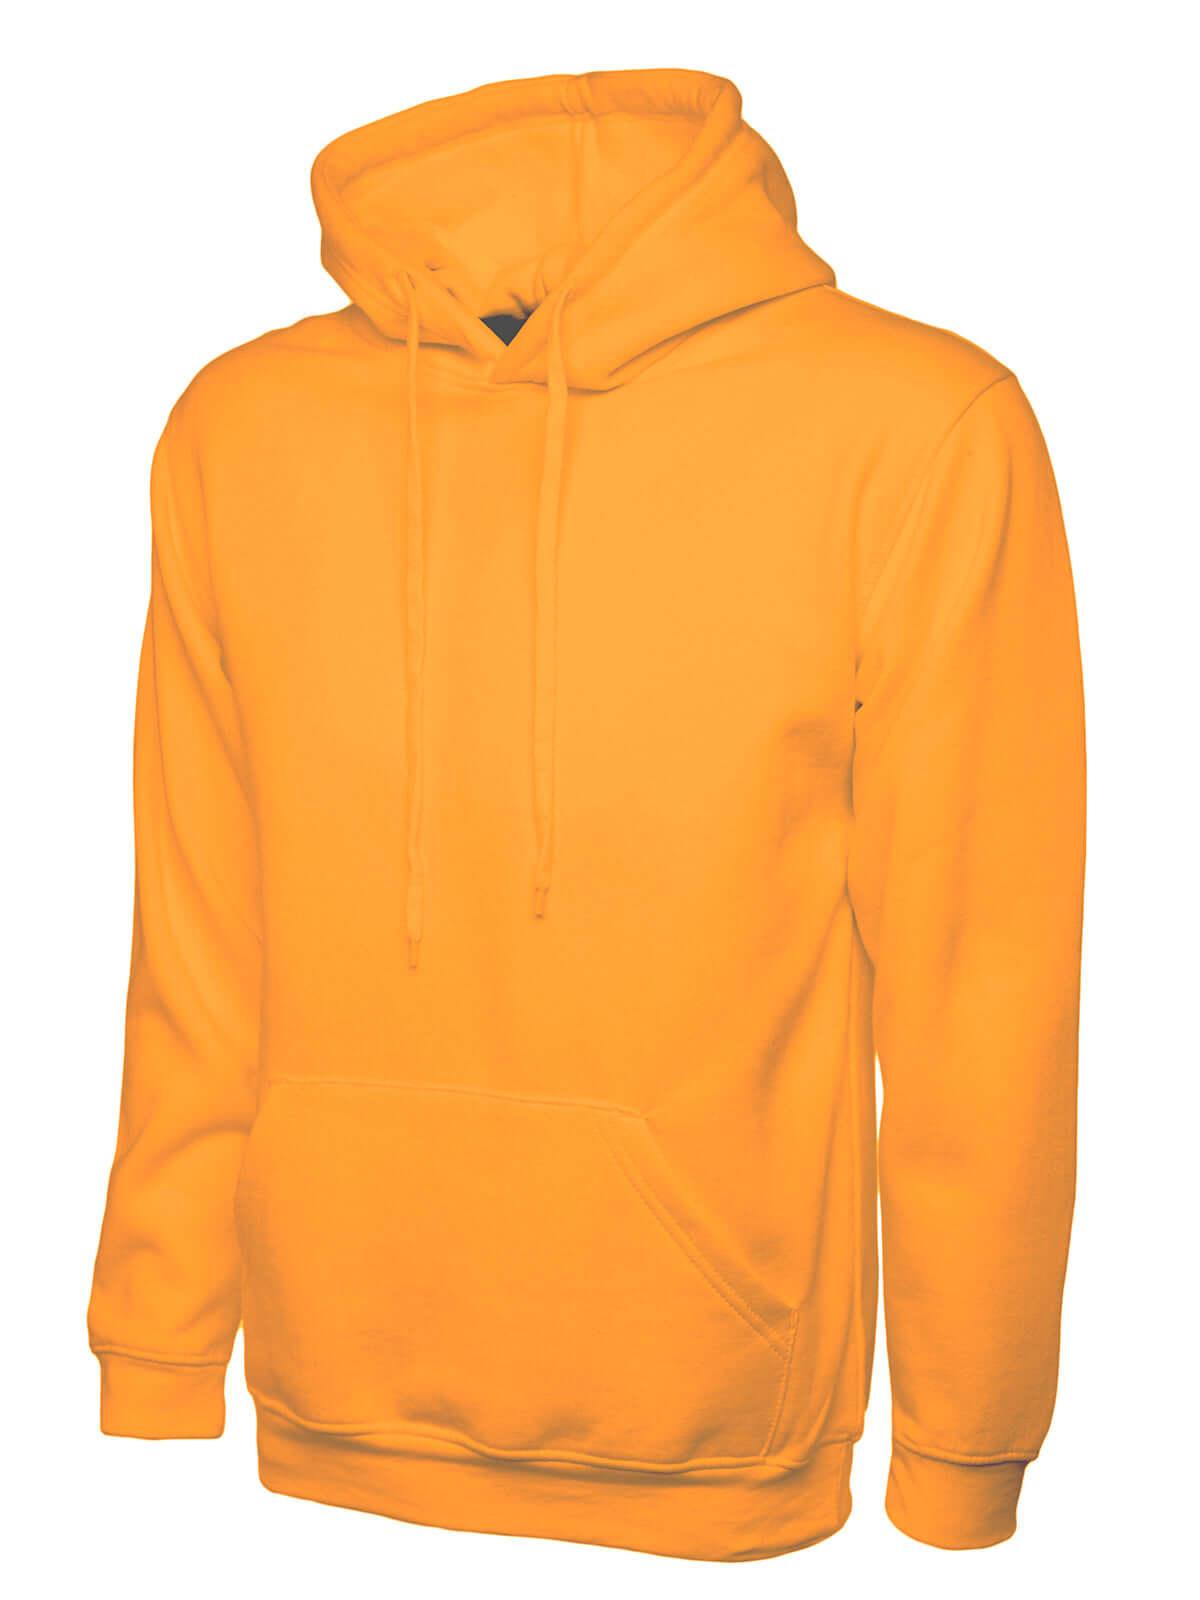 Pegasus Uniform Classic Hooded Sweatshirt - Orange